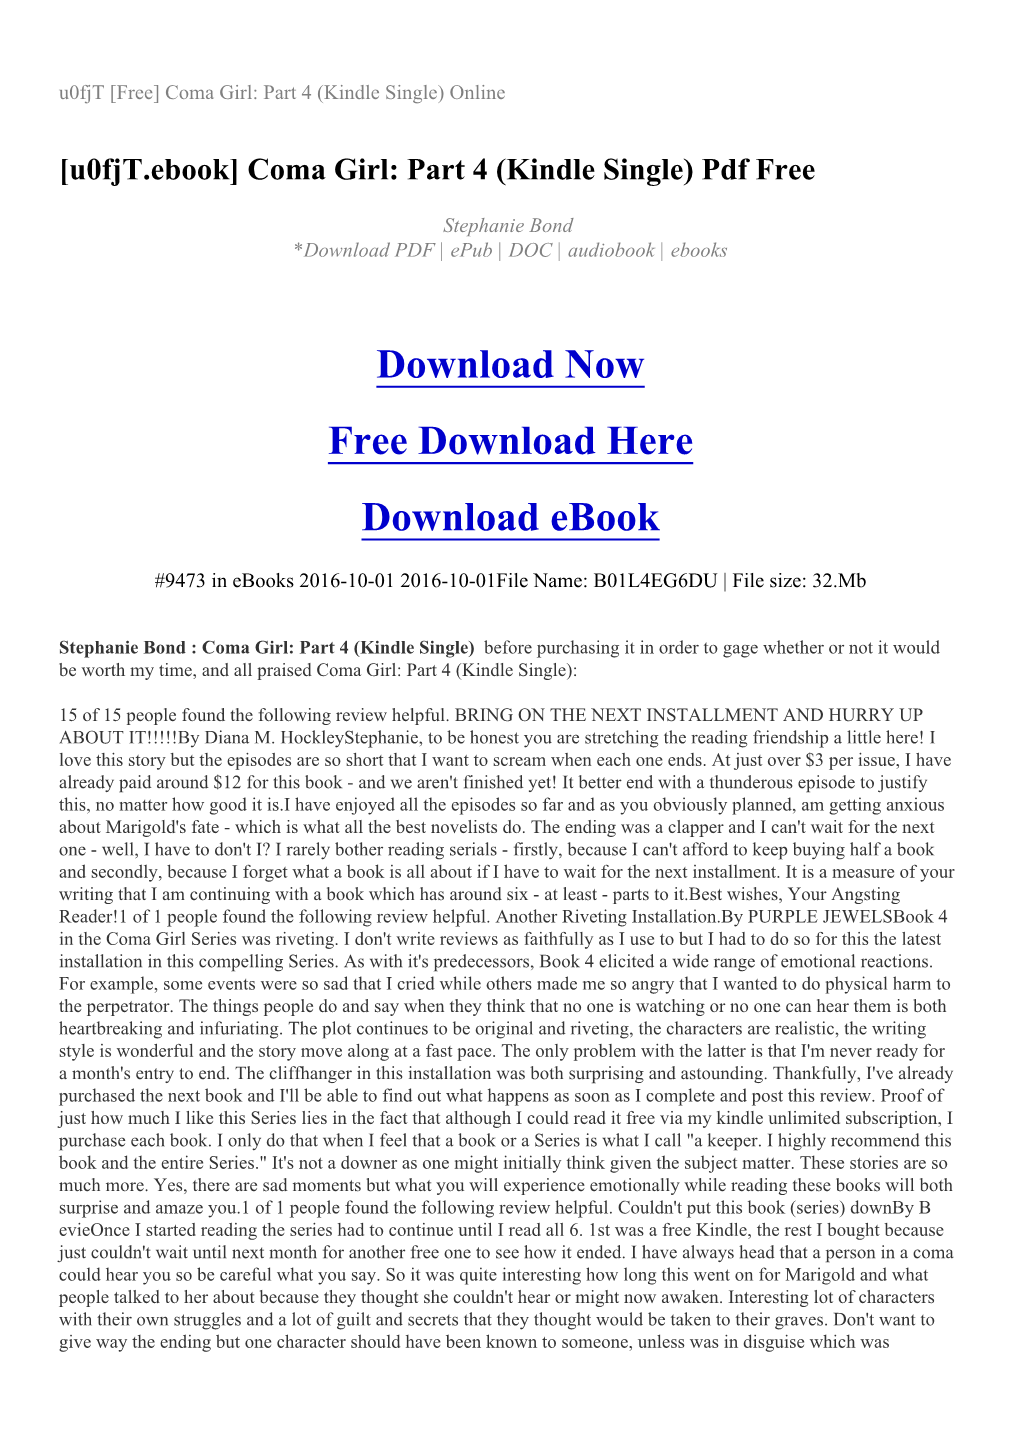 [U0fjt.Ebook] Coma Girl: Part 4 (Kindle Single) Pdf Free